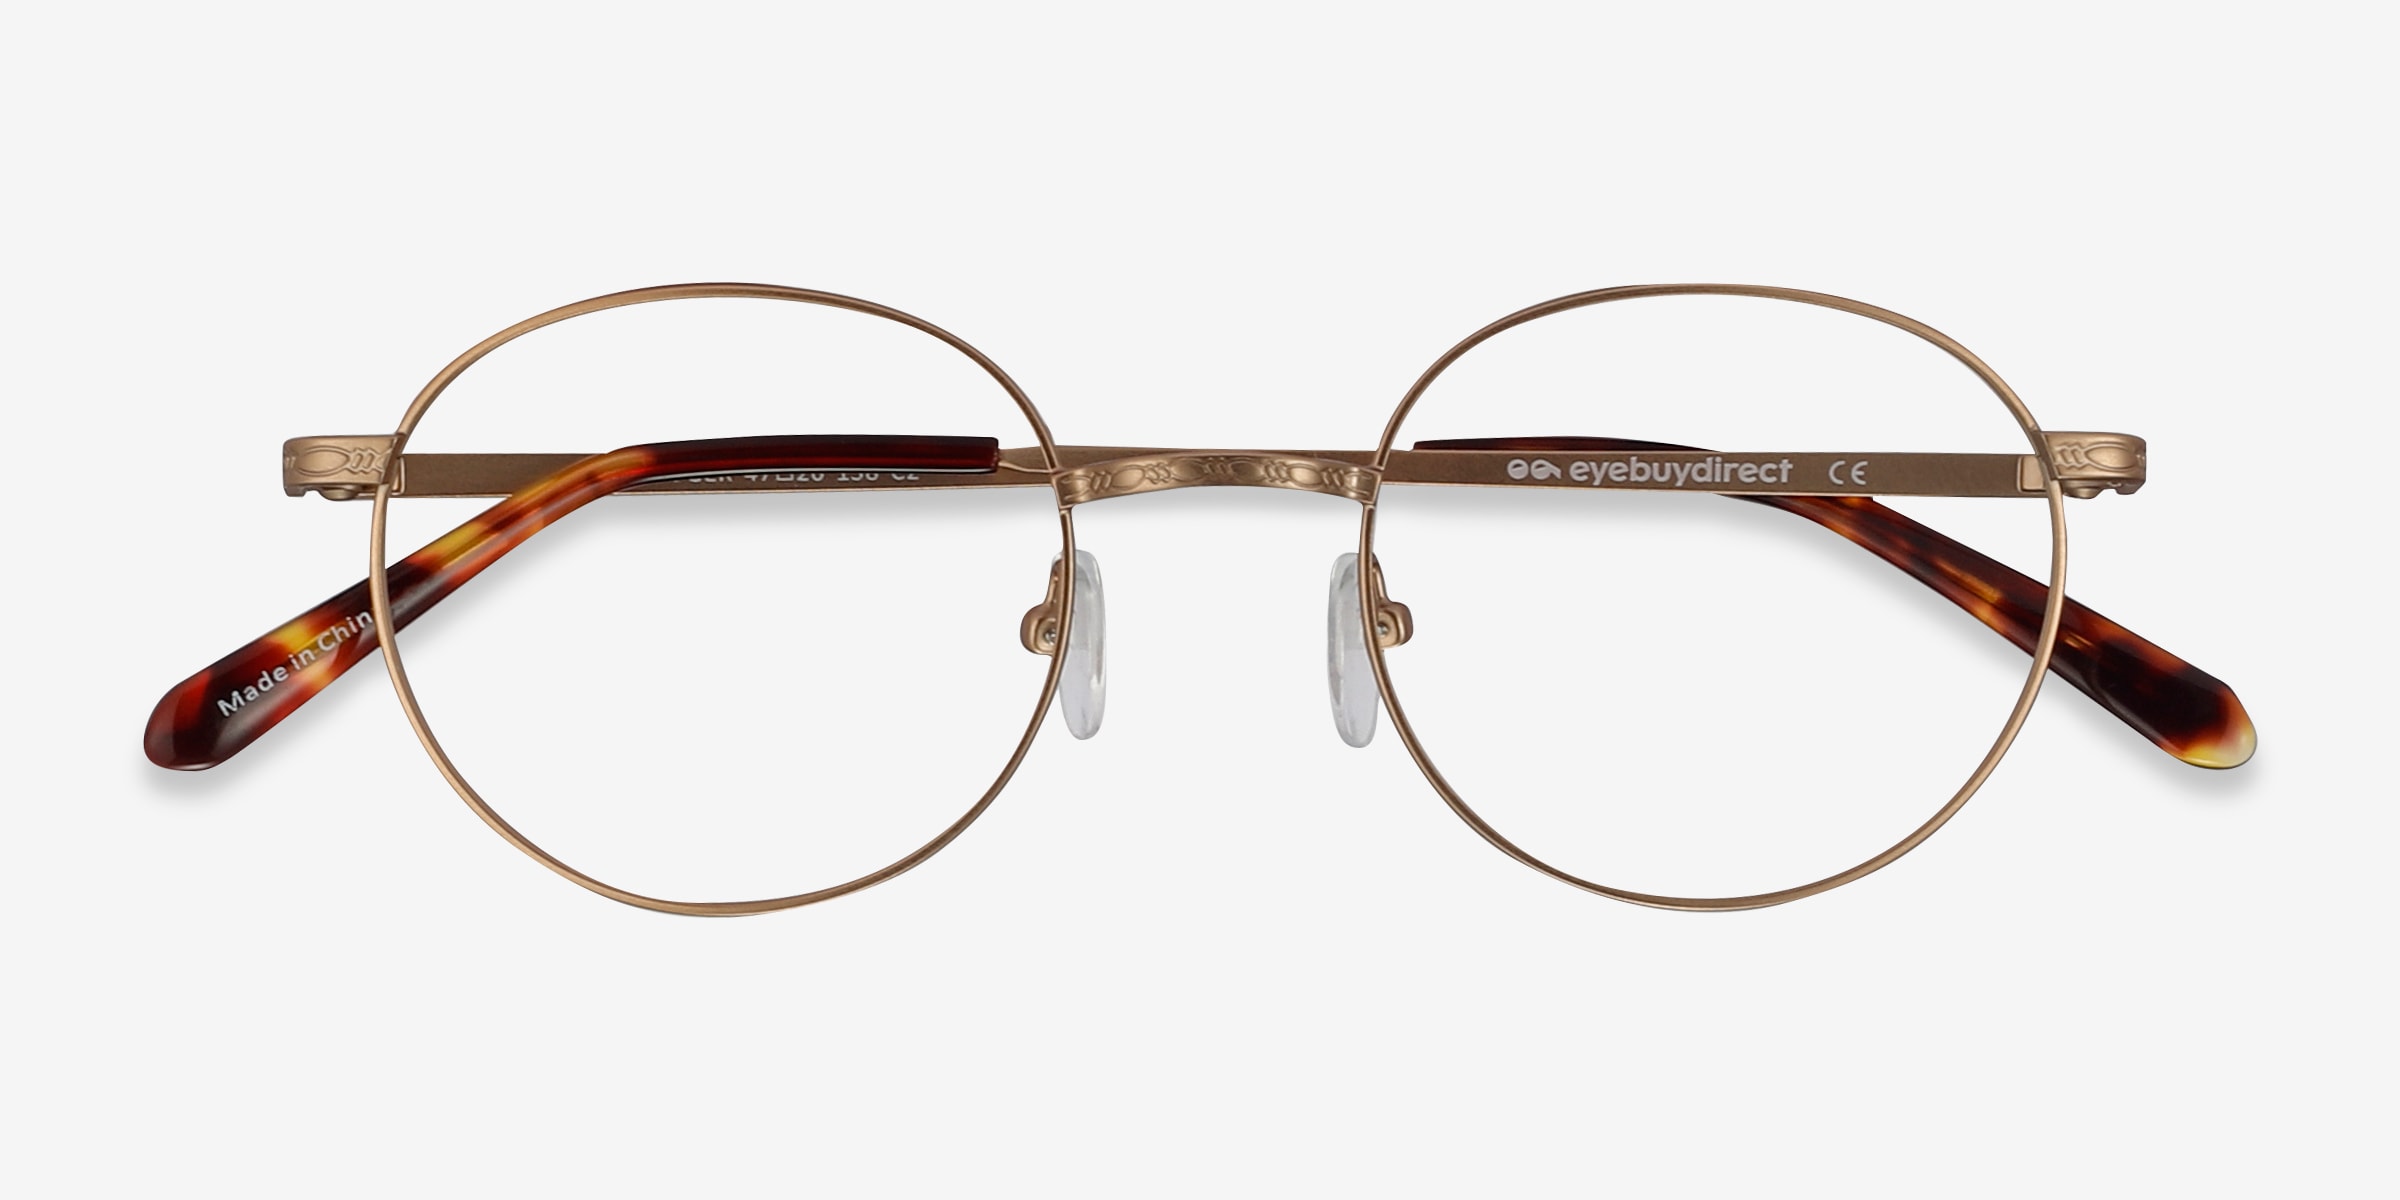 Vintage Style Glasses Frames for Men and Women | Eyebuydirect